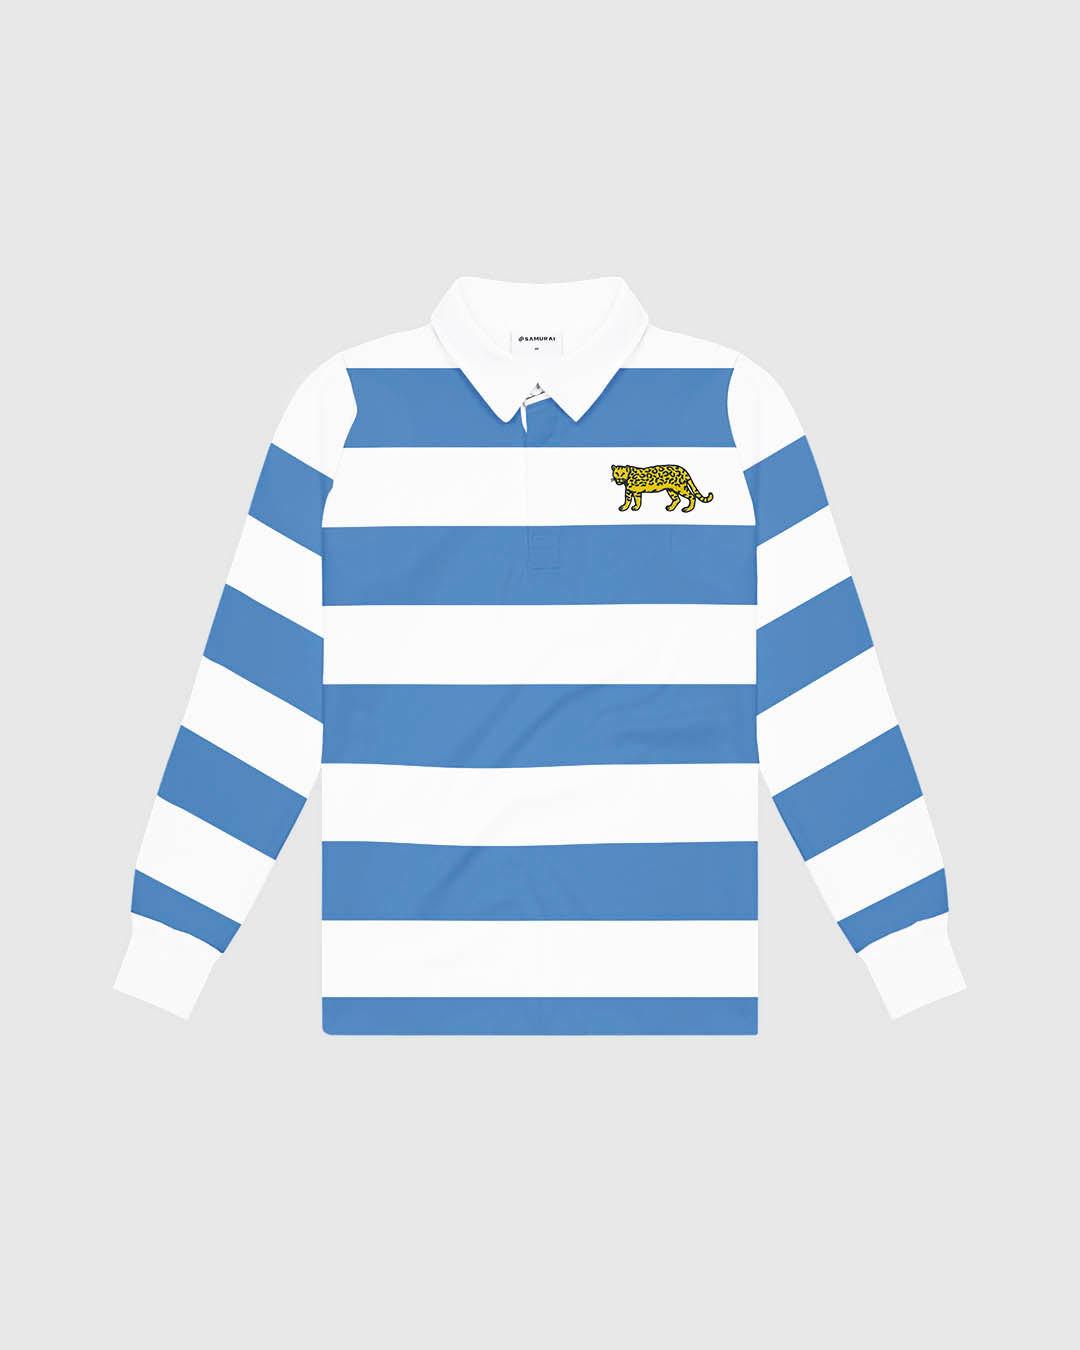 VC: ARG - Women's Vintage Rugby Shirt - Argentina